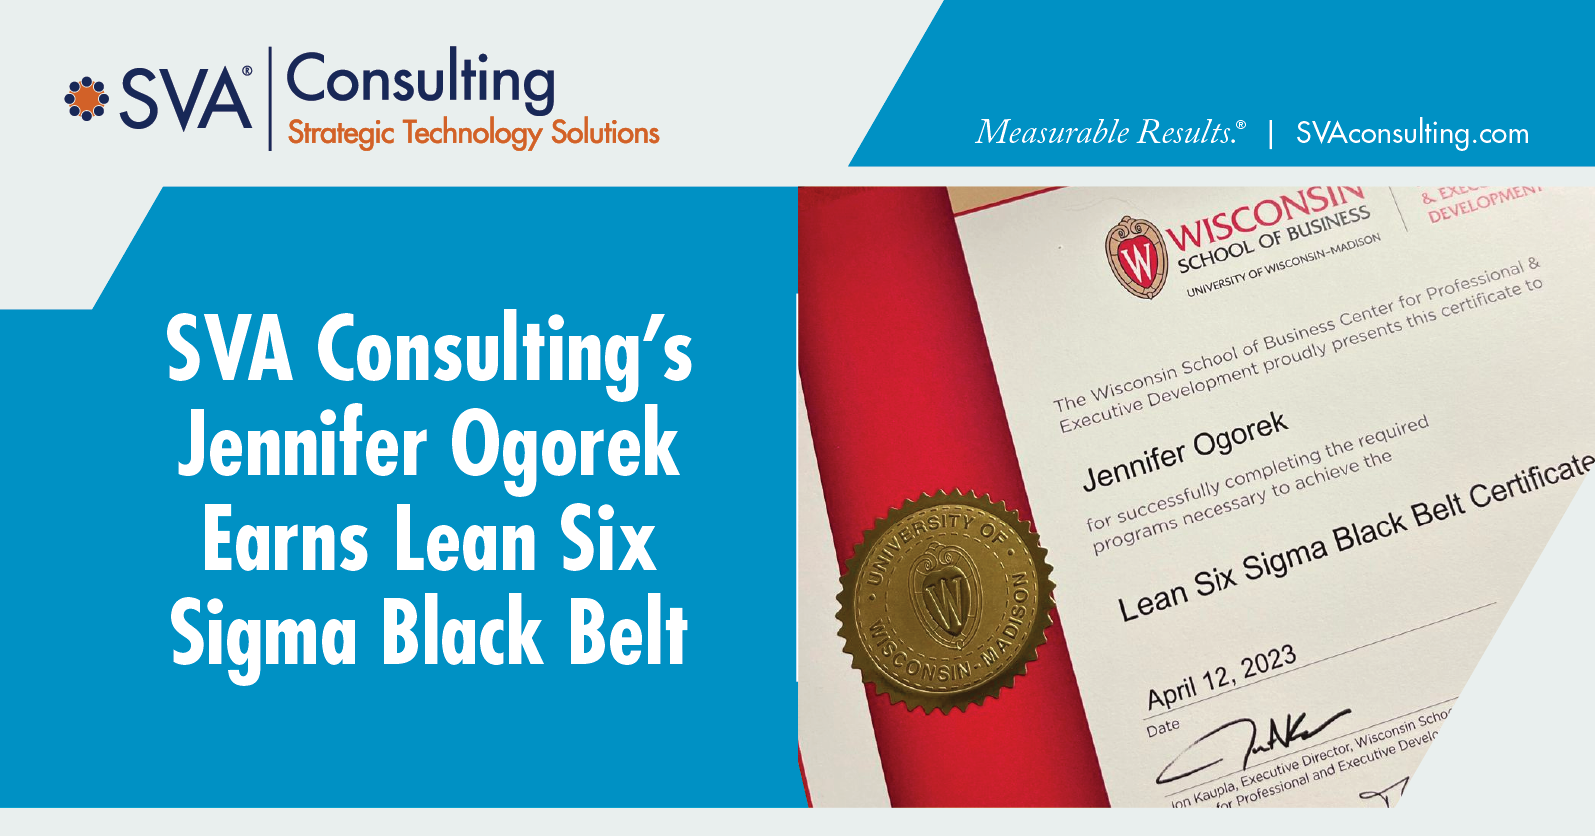 SVA Consulting’s Jennifer Ogorek Earns Lean Six Sigma Black Belt